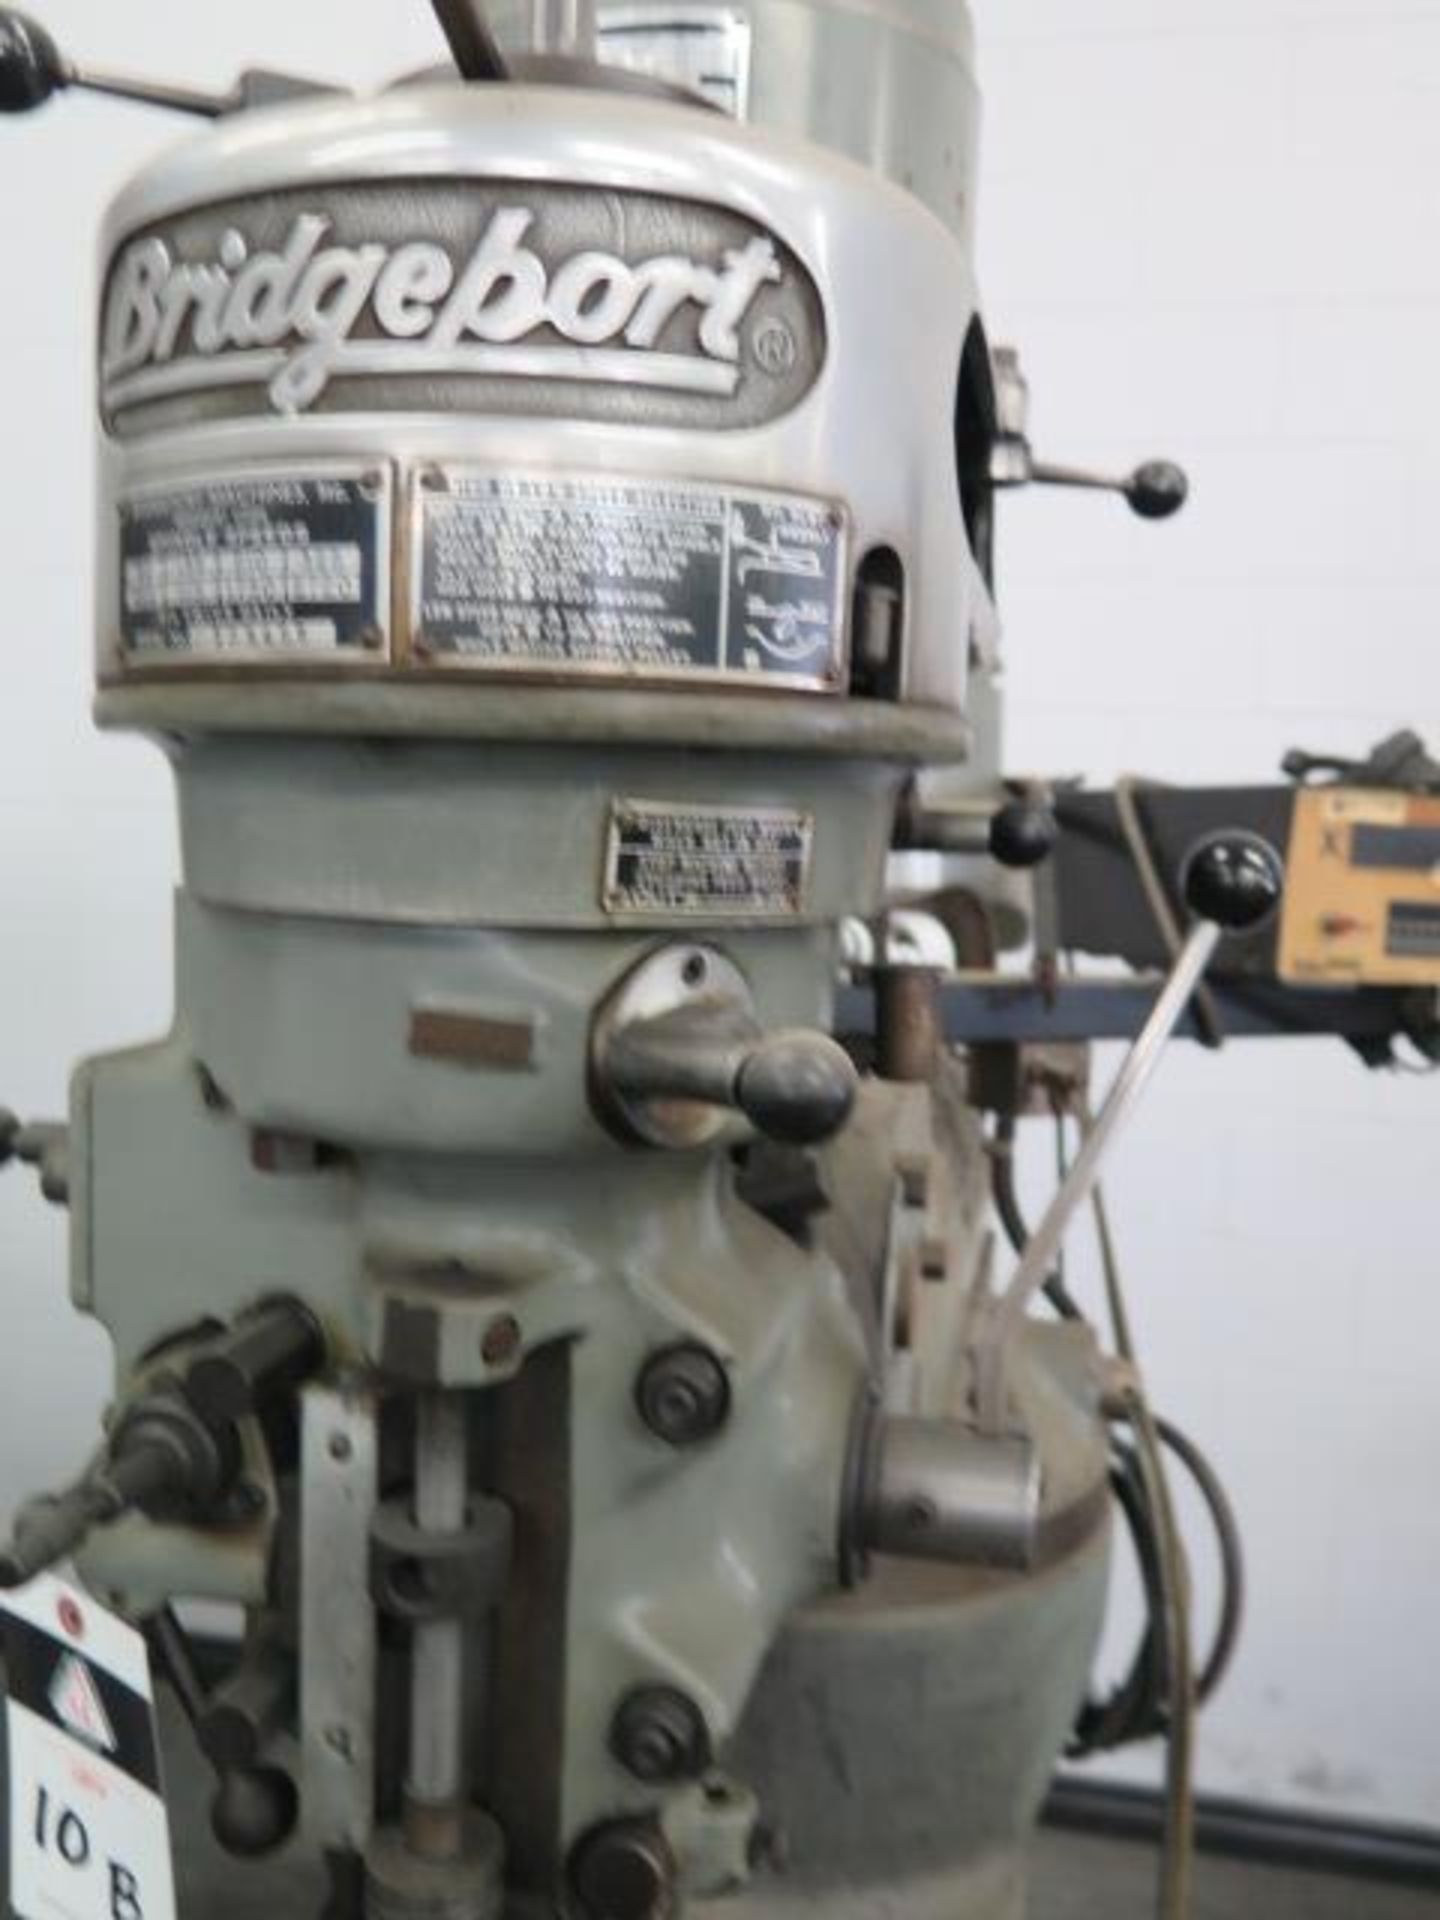 Bridgeport Vertical Mill s/n 88019 w/ Heidenhain DRO, 1Hp Motor, 80-2720 RPM, 8-Speeds, SOLD AS IS - Image 5 of 13